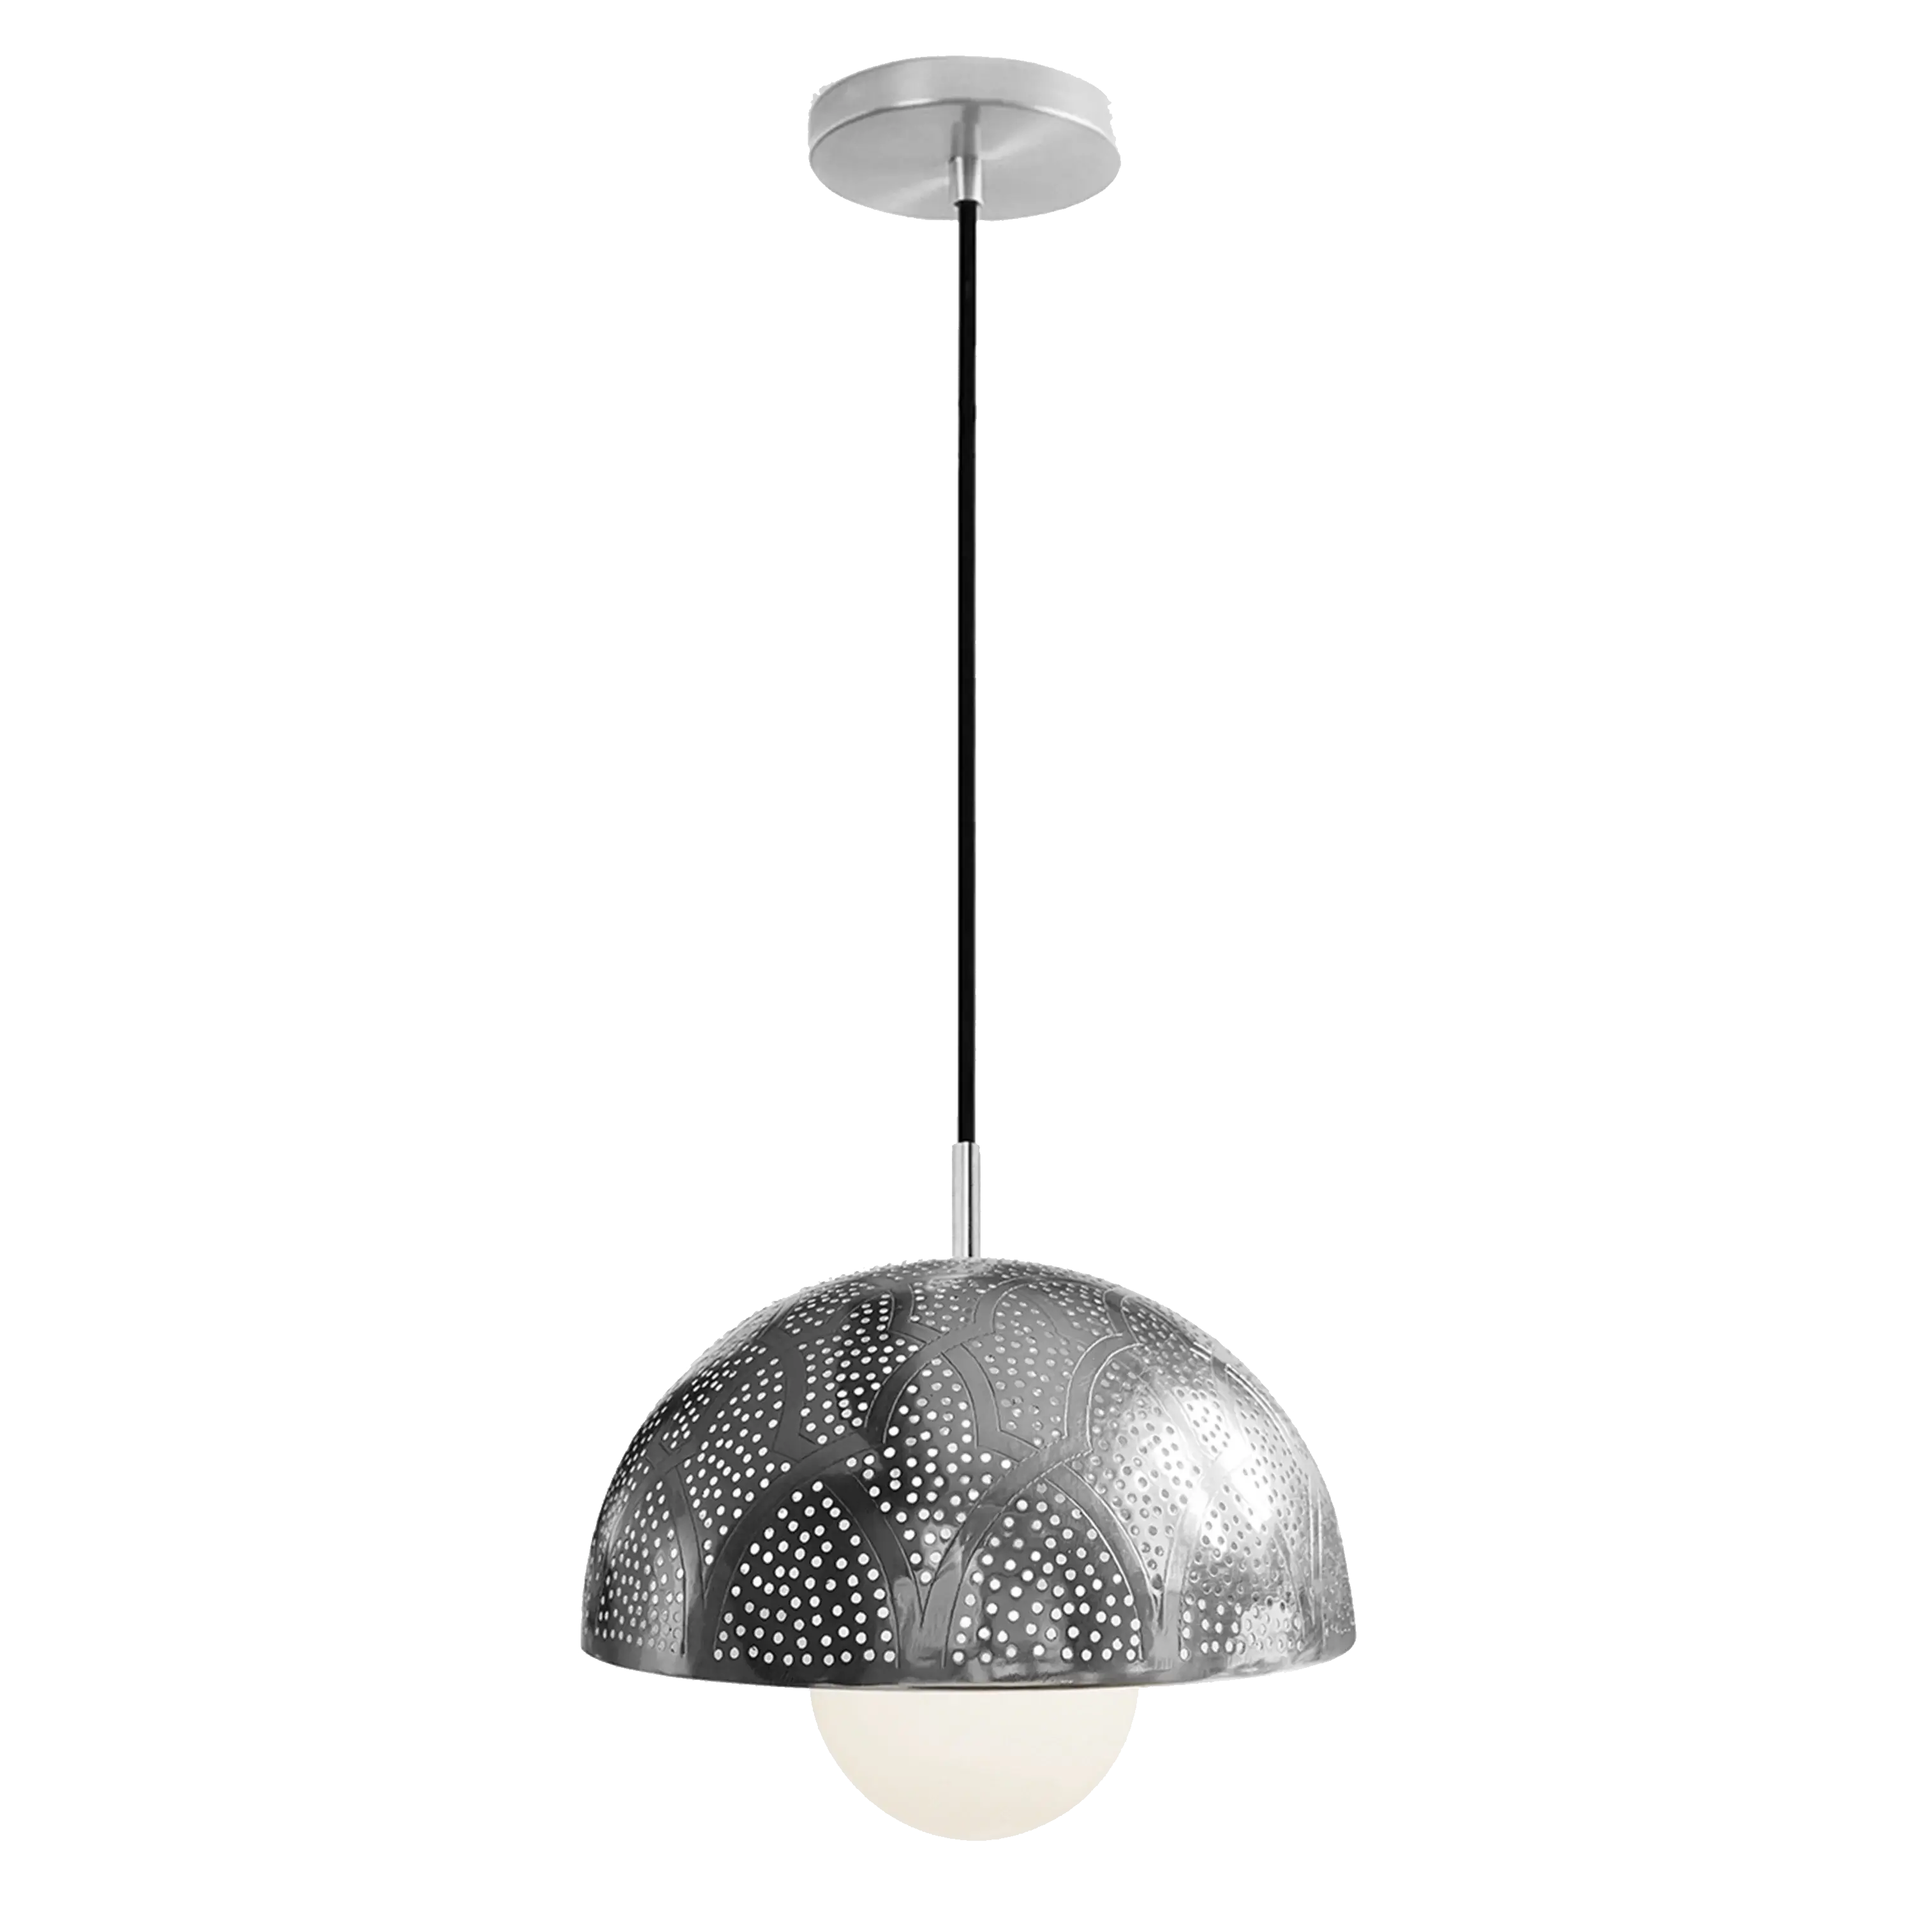 Dounia home Pendant light in nickel silver  made of Metal, Model: Zana Dome